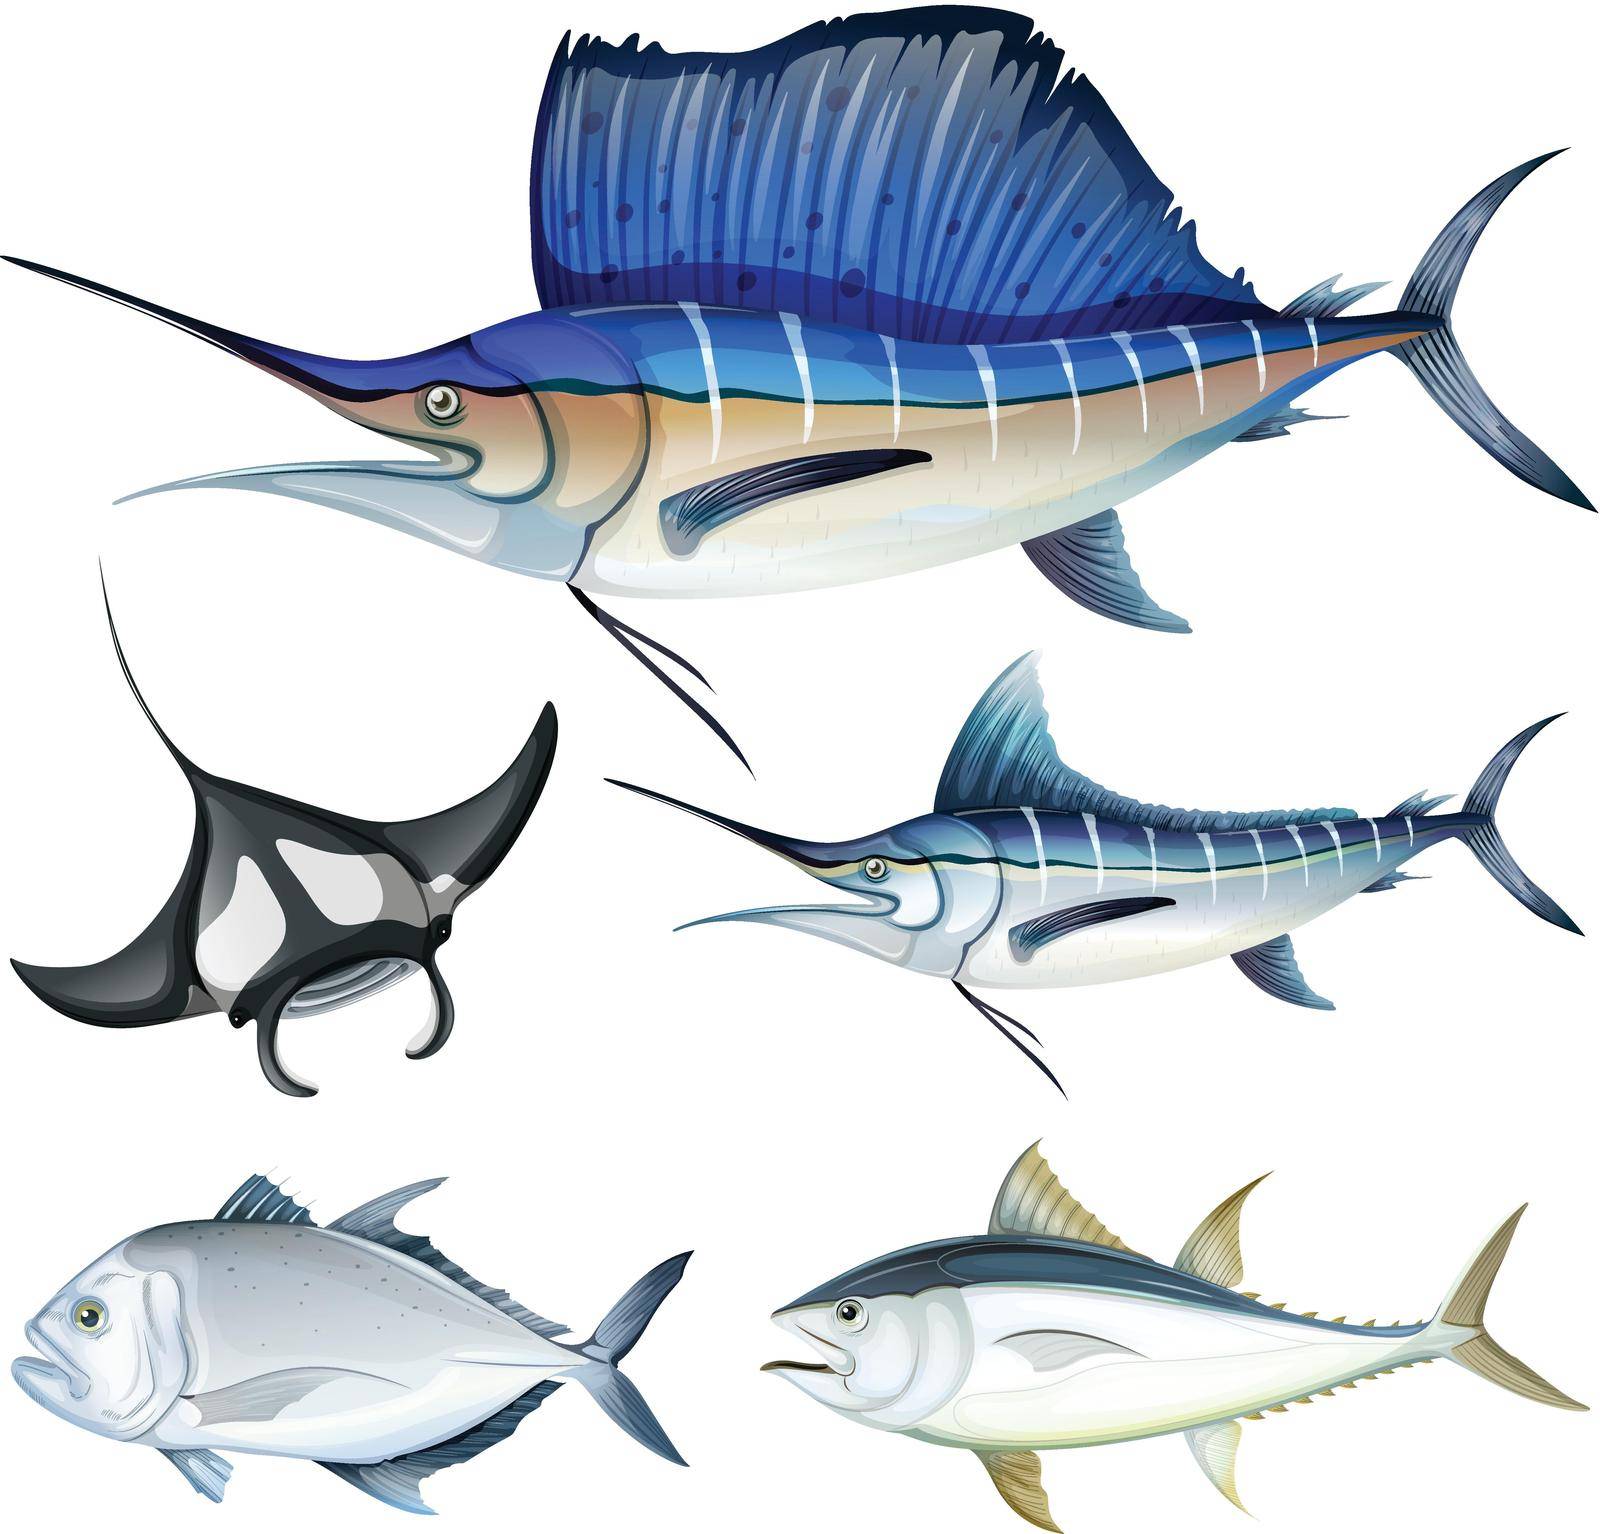 Different kind of fish illustration